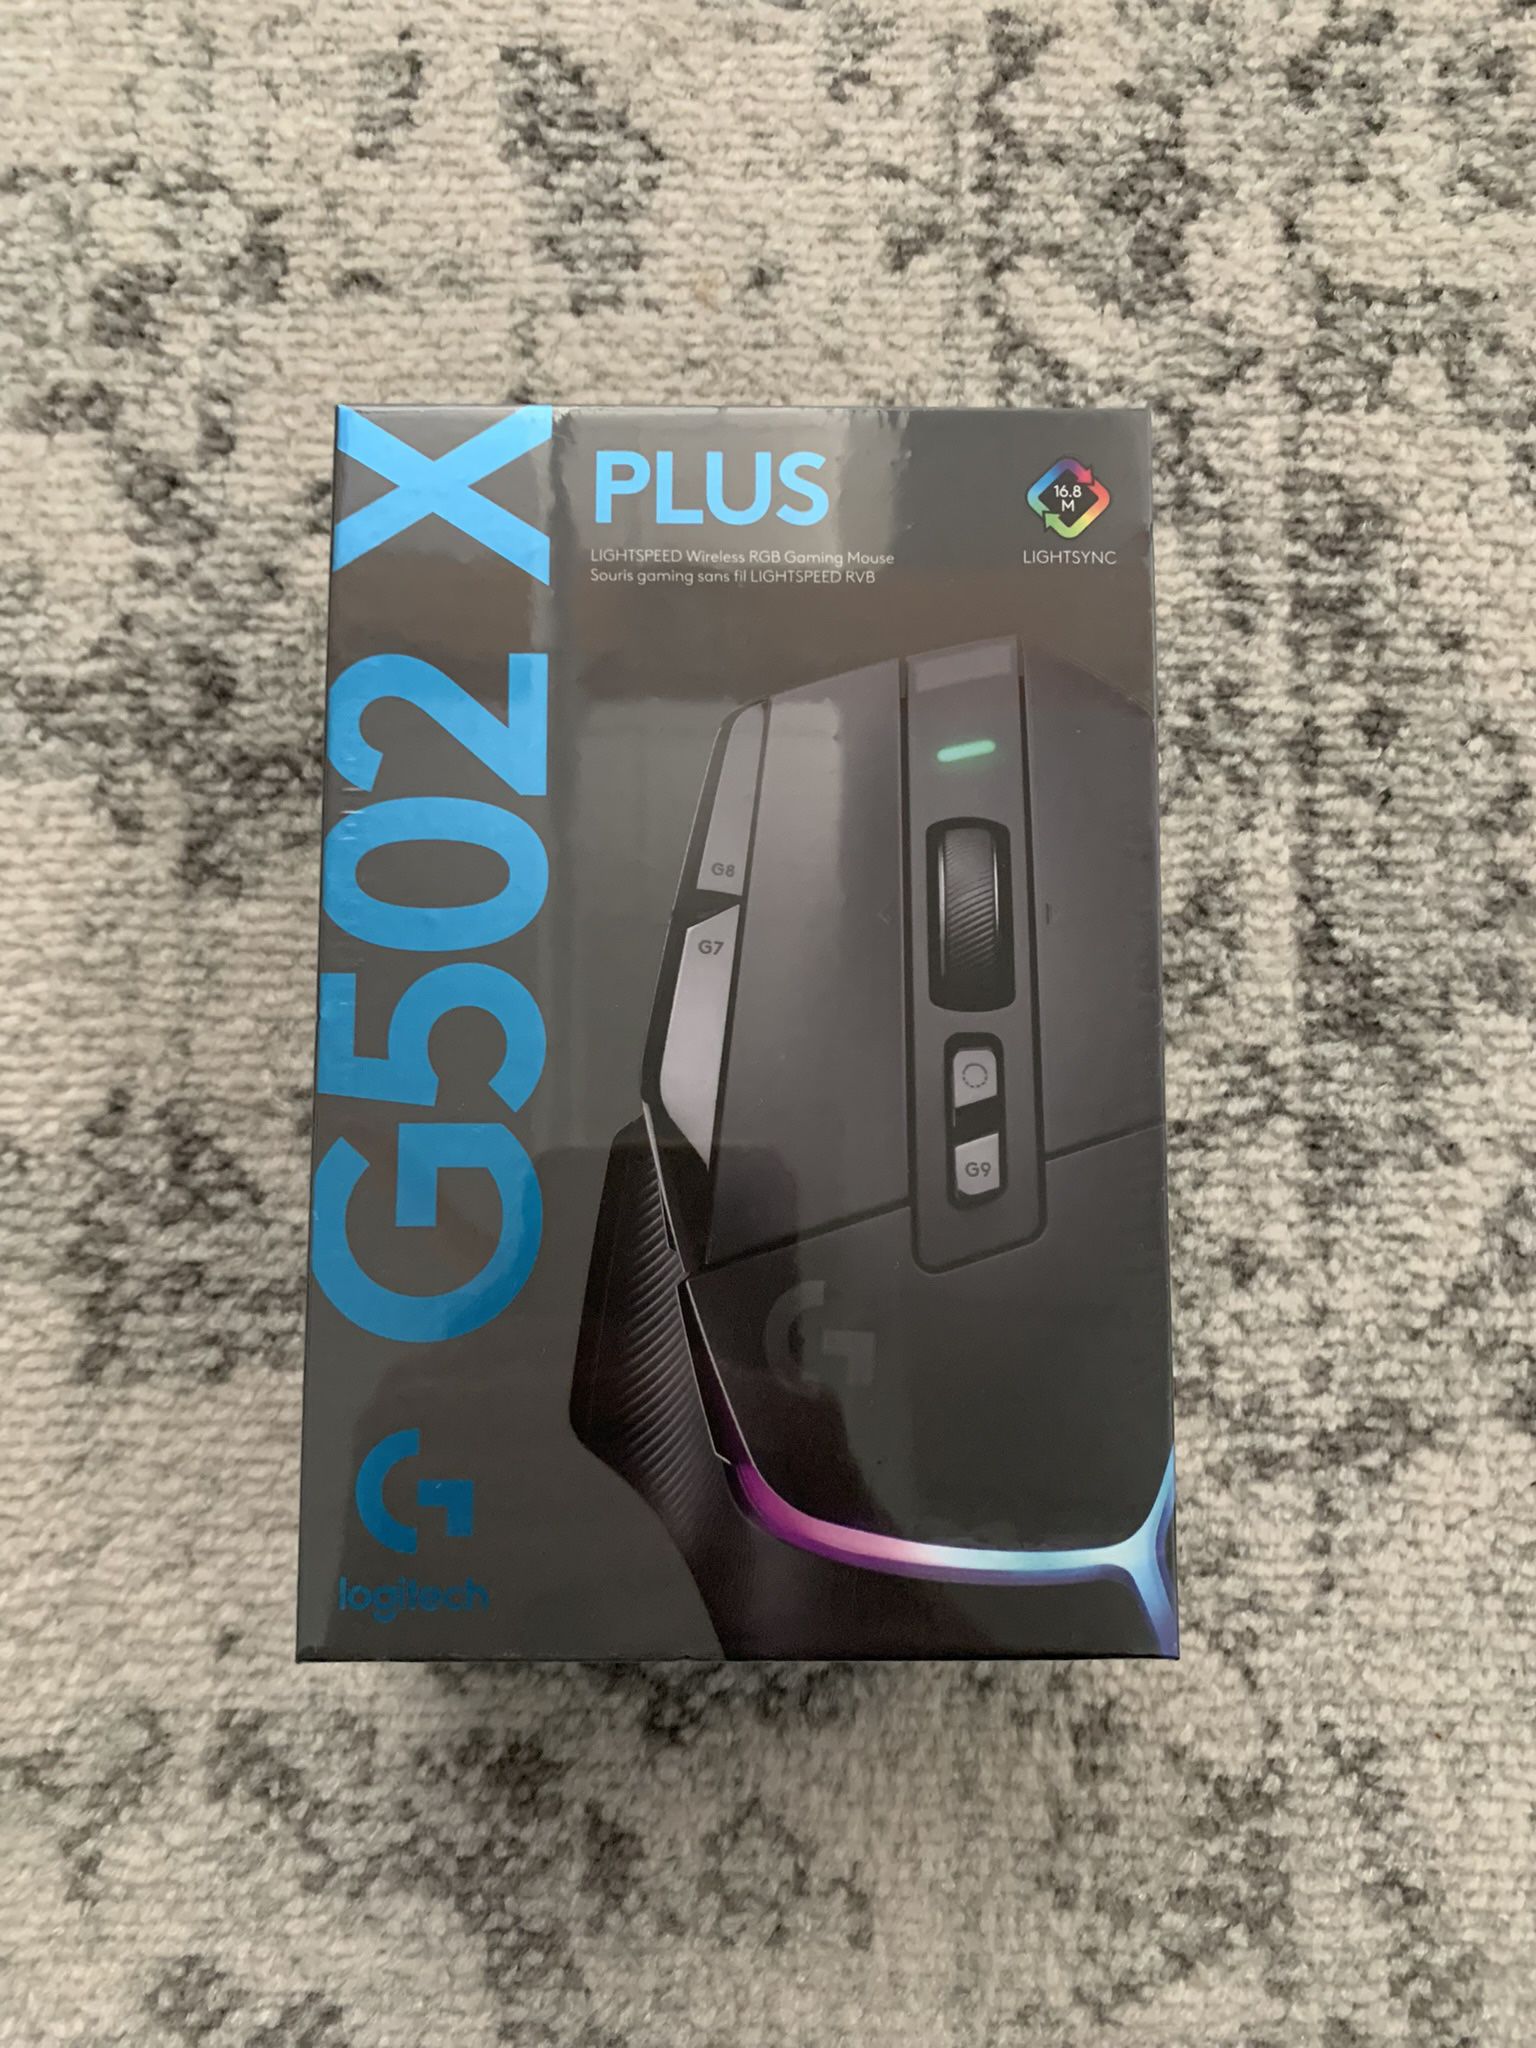 G502 C Plus wireless mouse